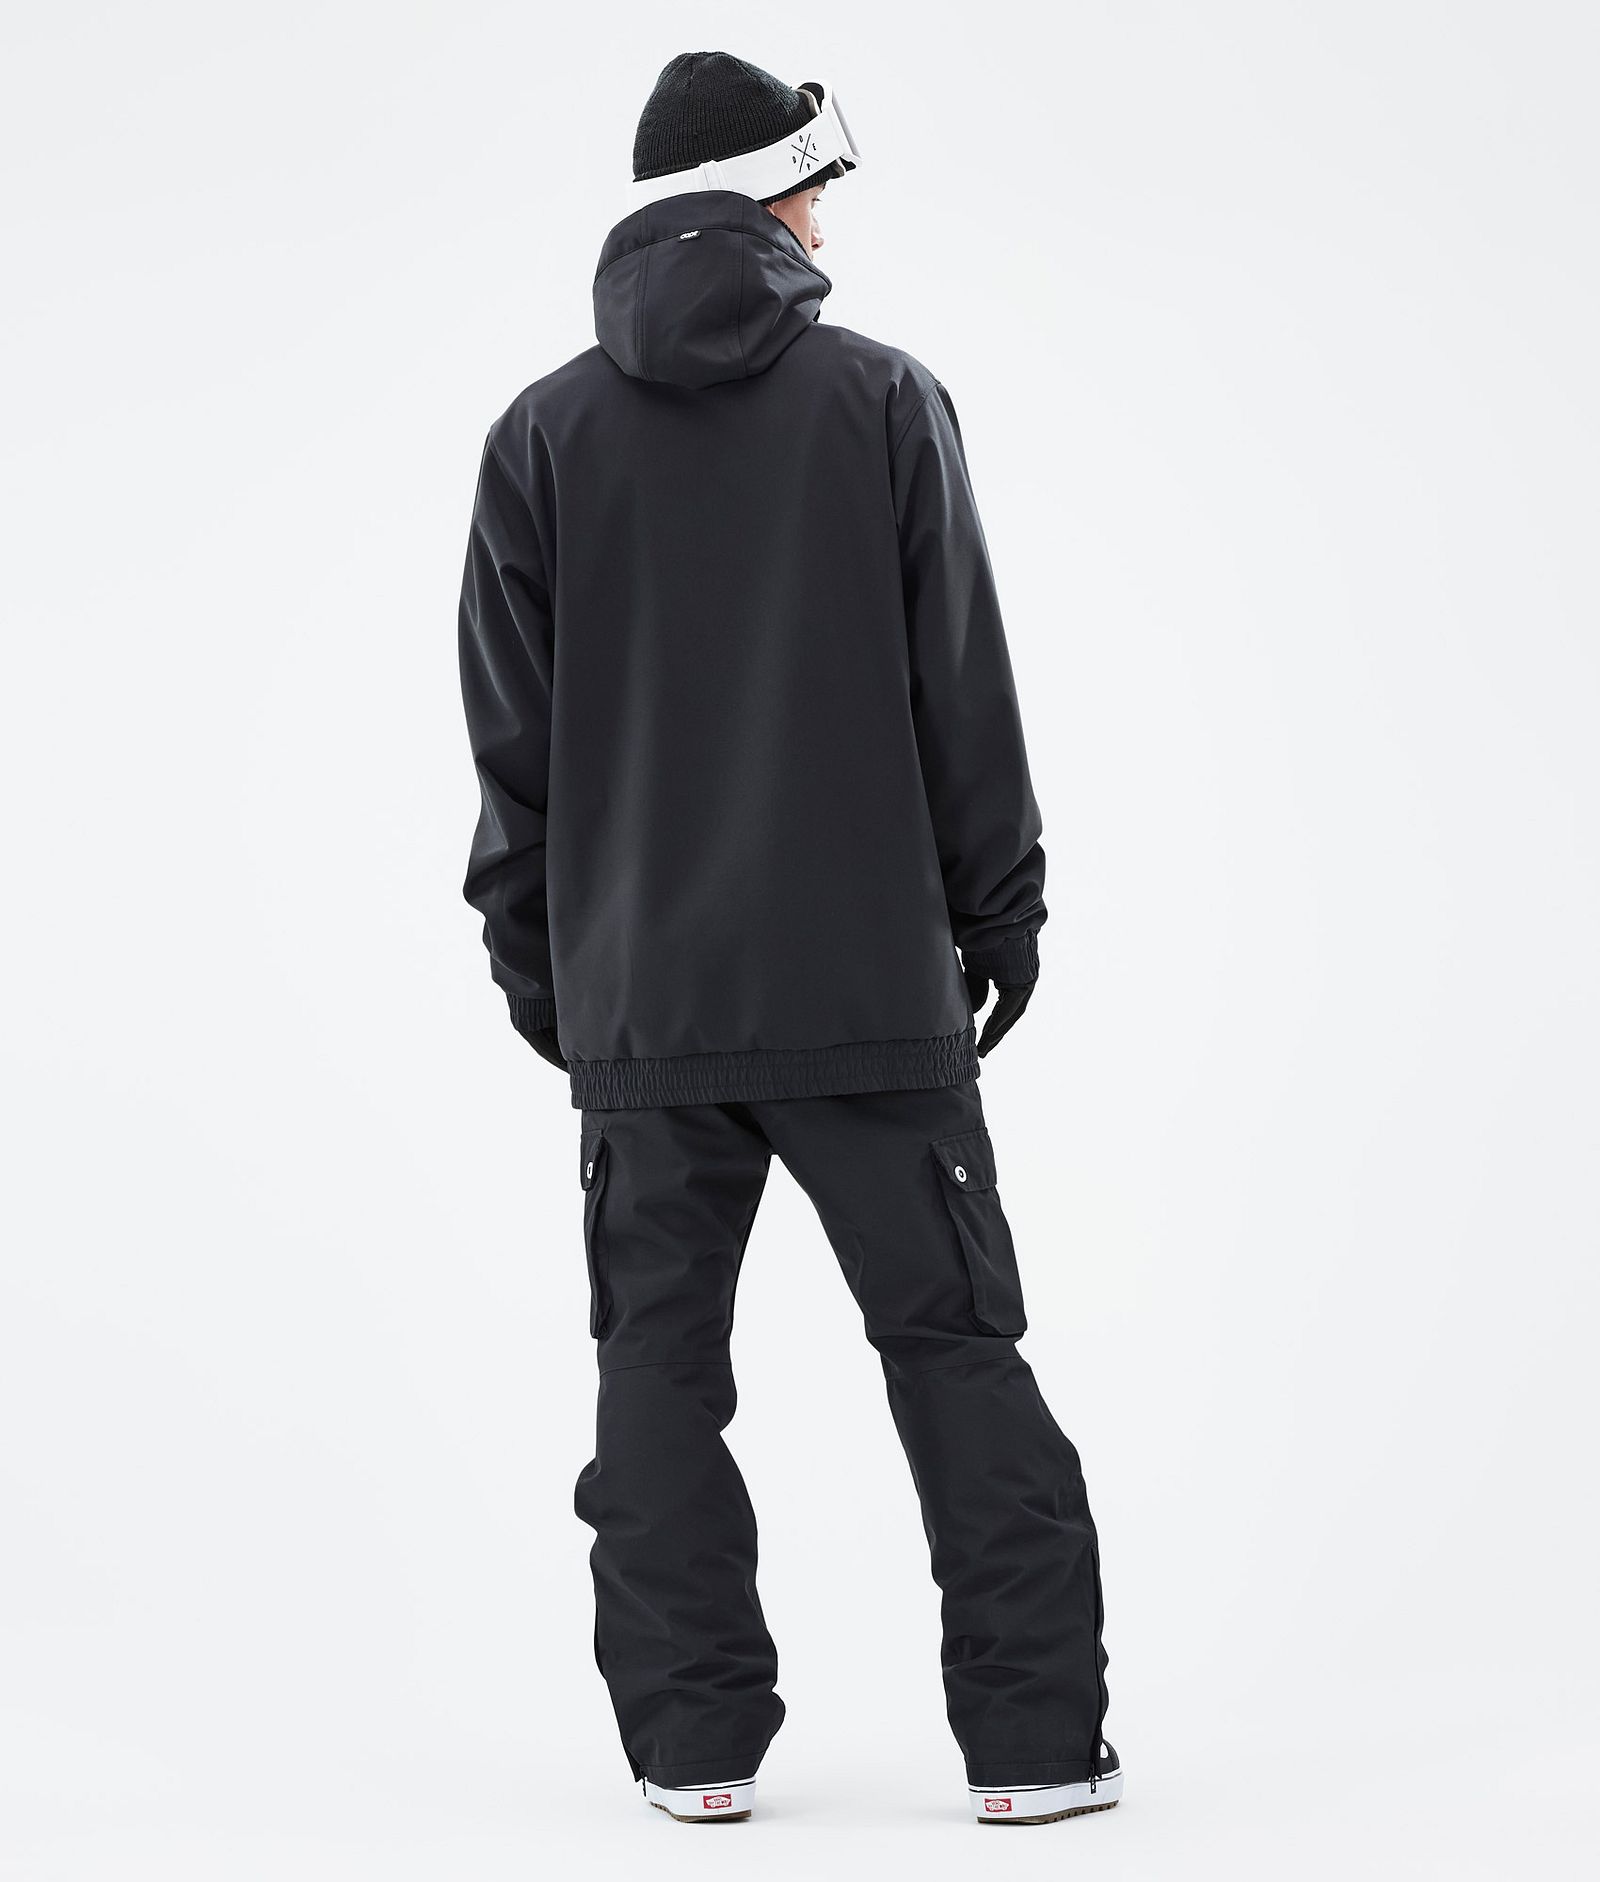 Yeti Outfit Snowboard Uomo Black/Black